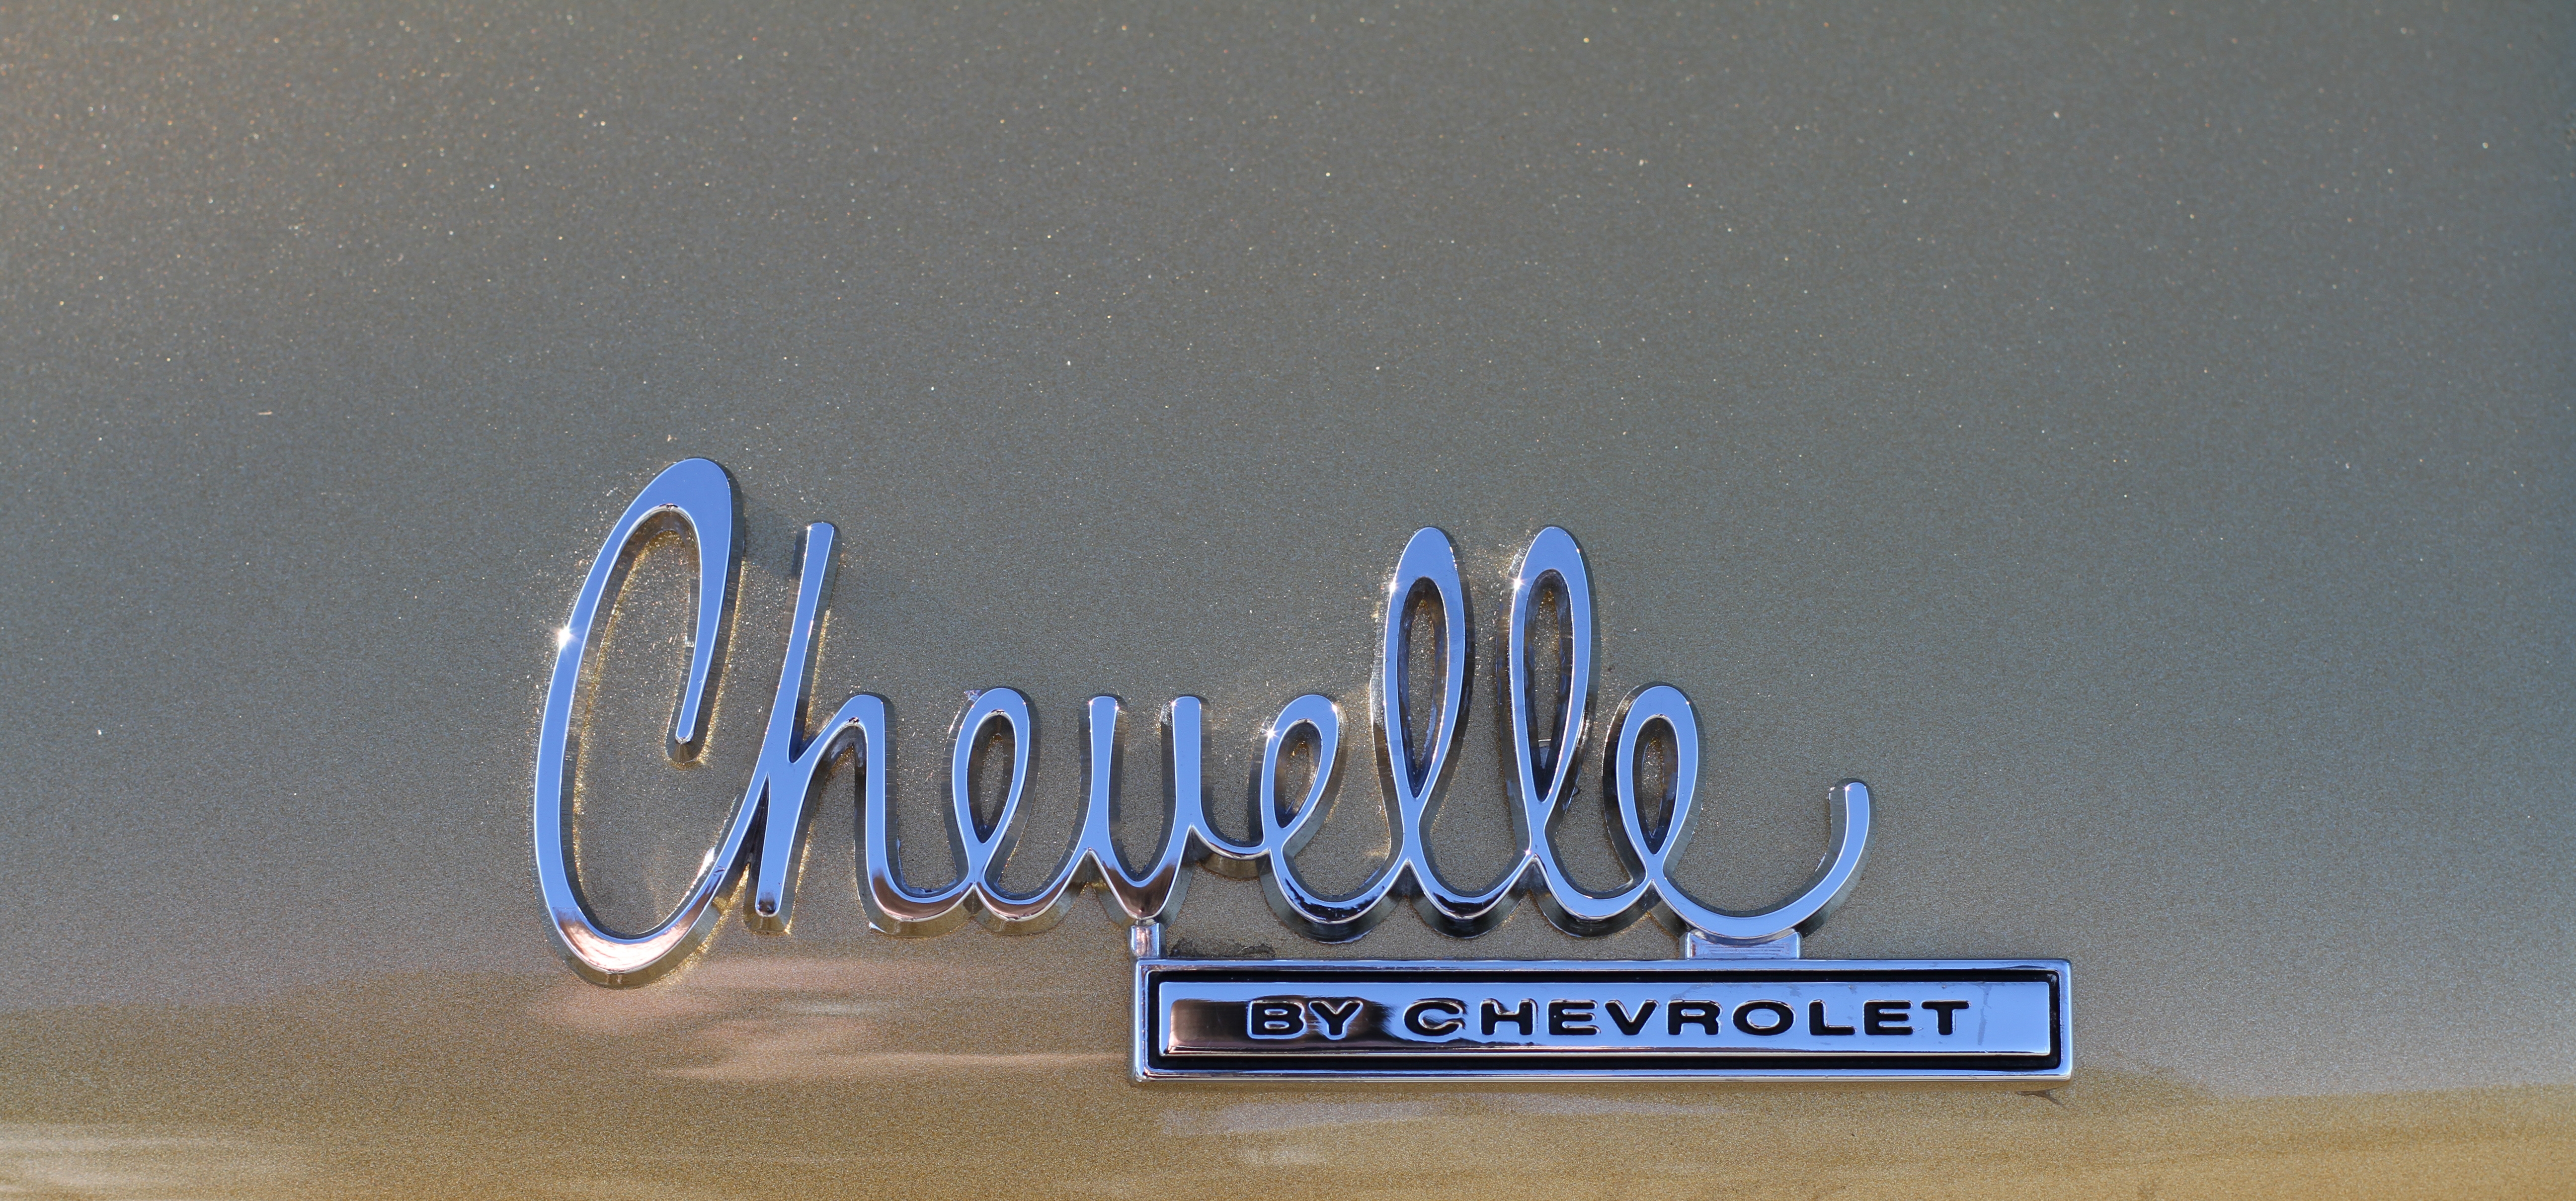 Vehicles Chevrolet Chevelle 5184x2416